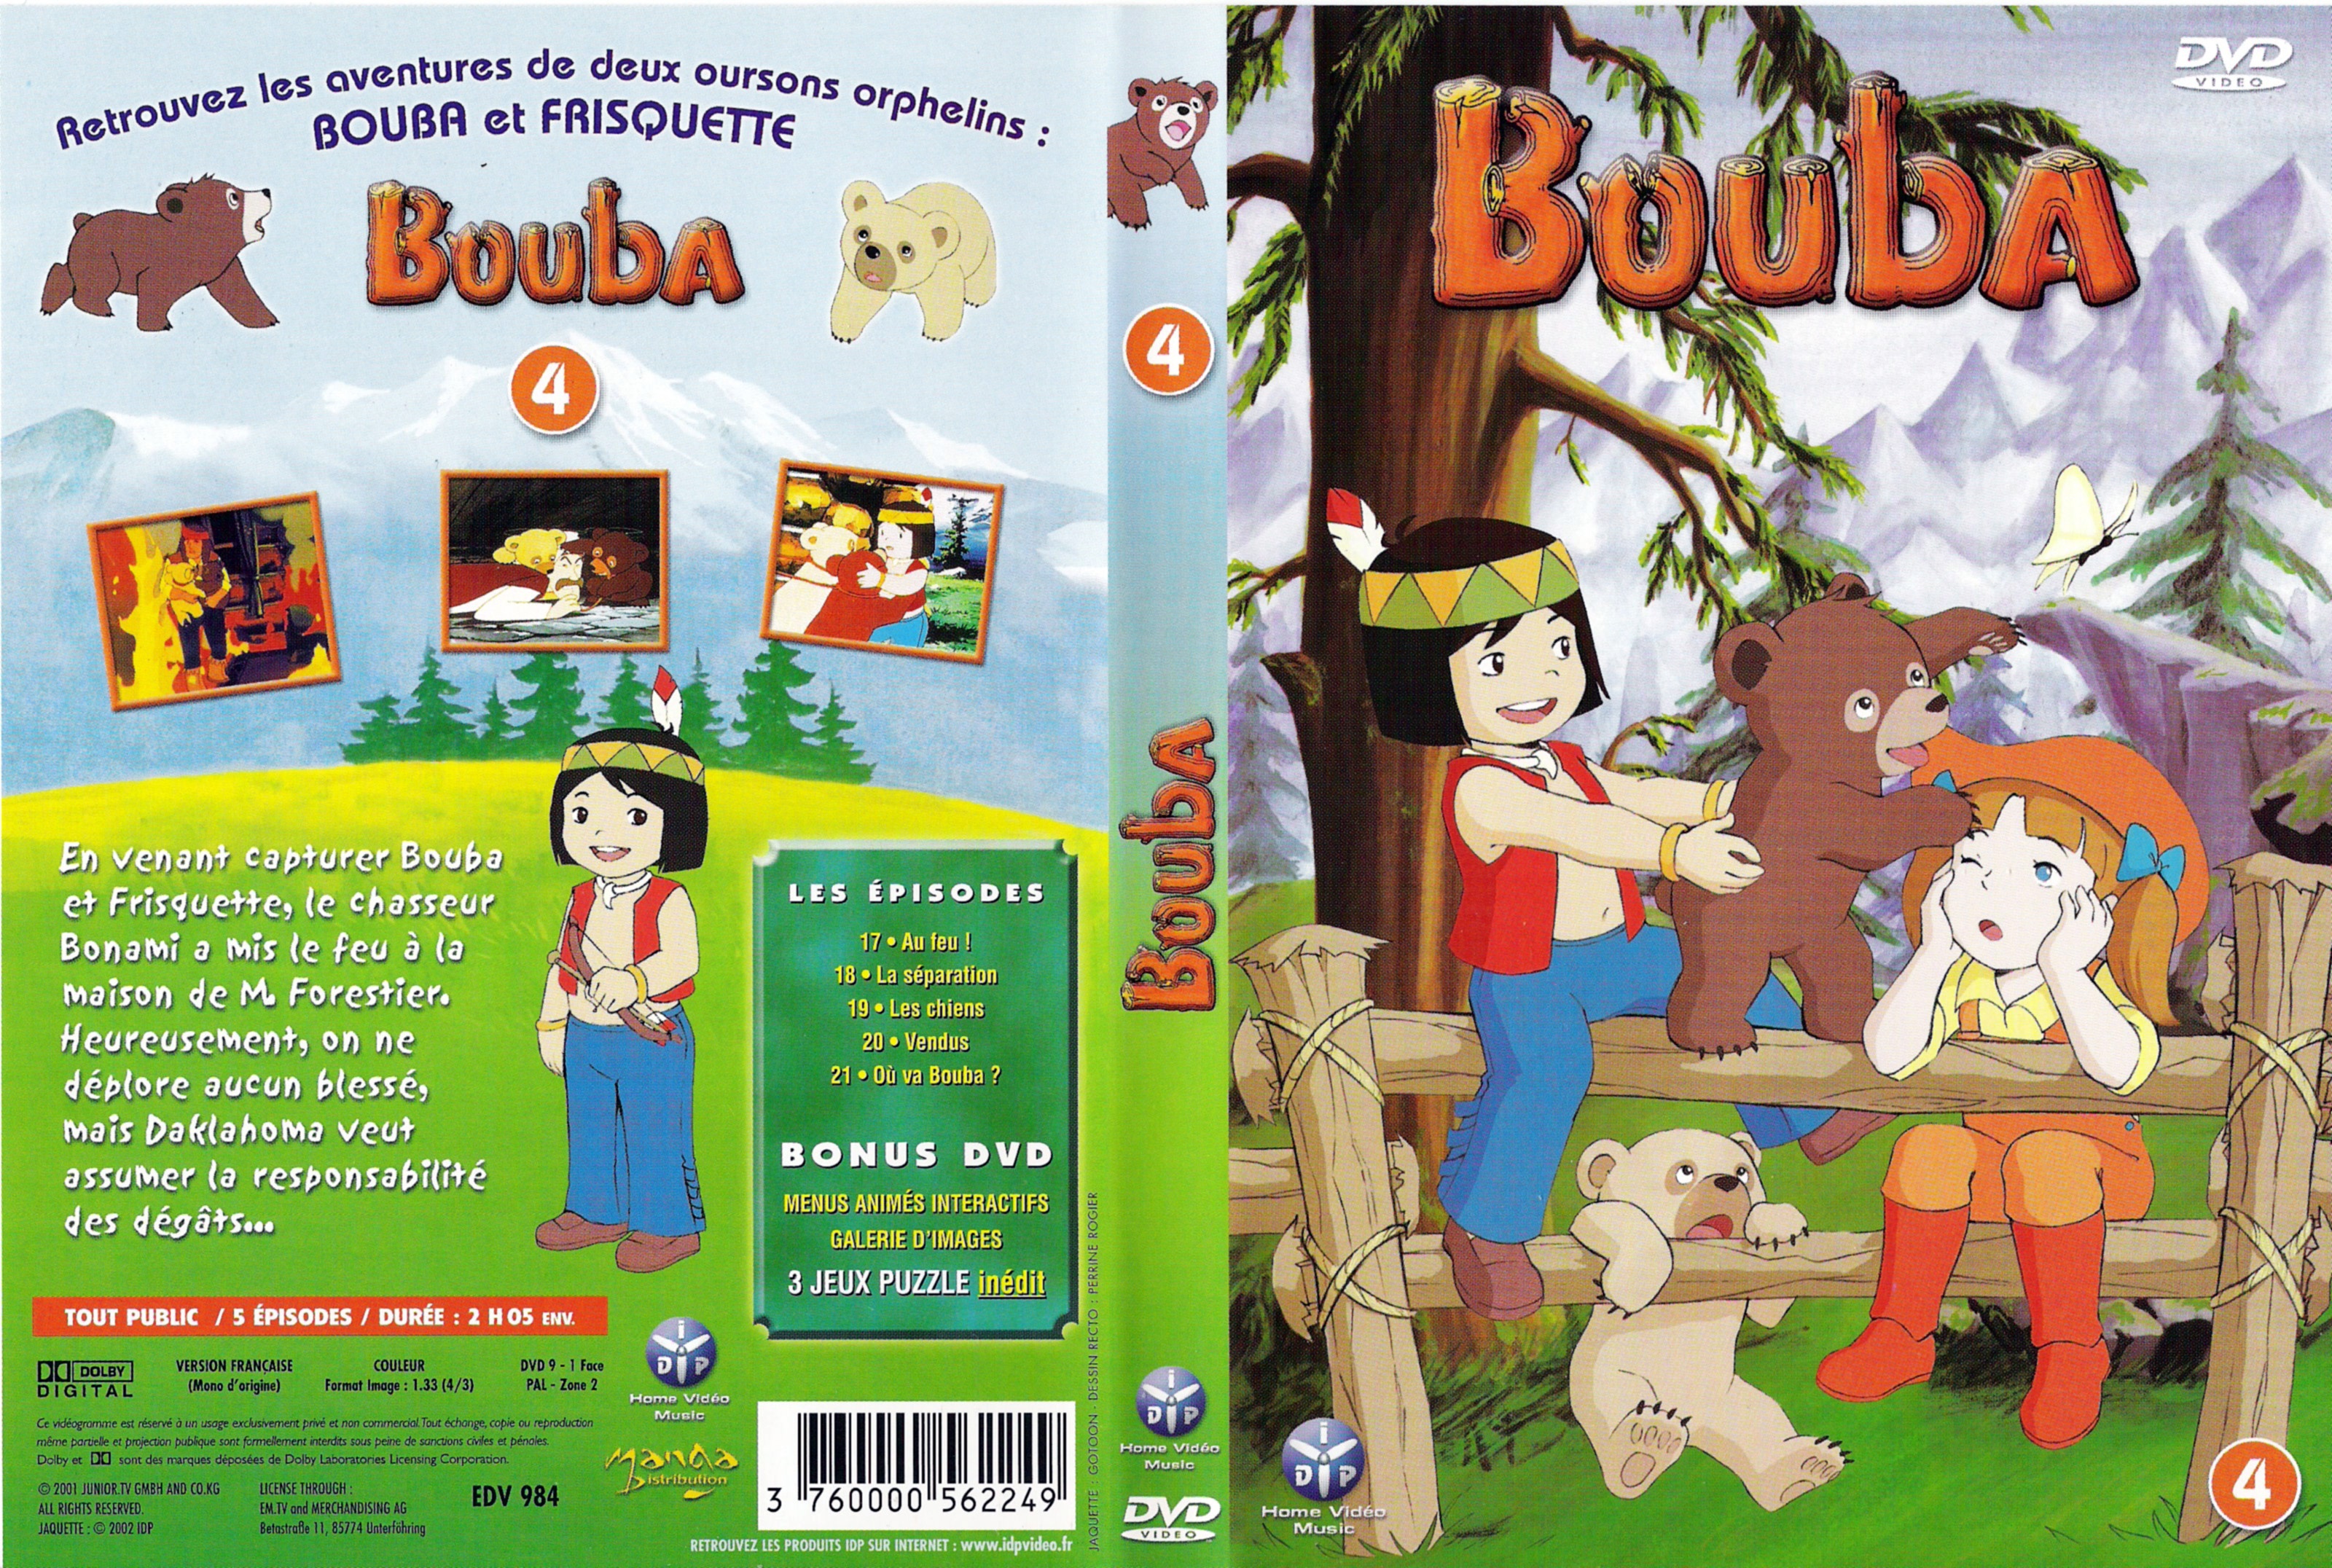 Jaquette DVD Bouba vol 4